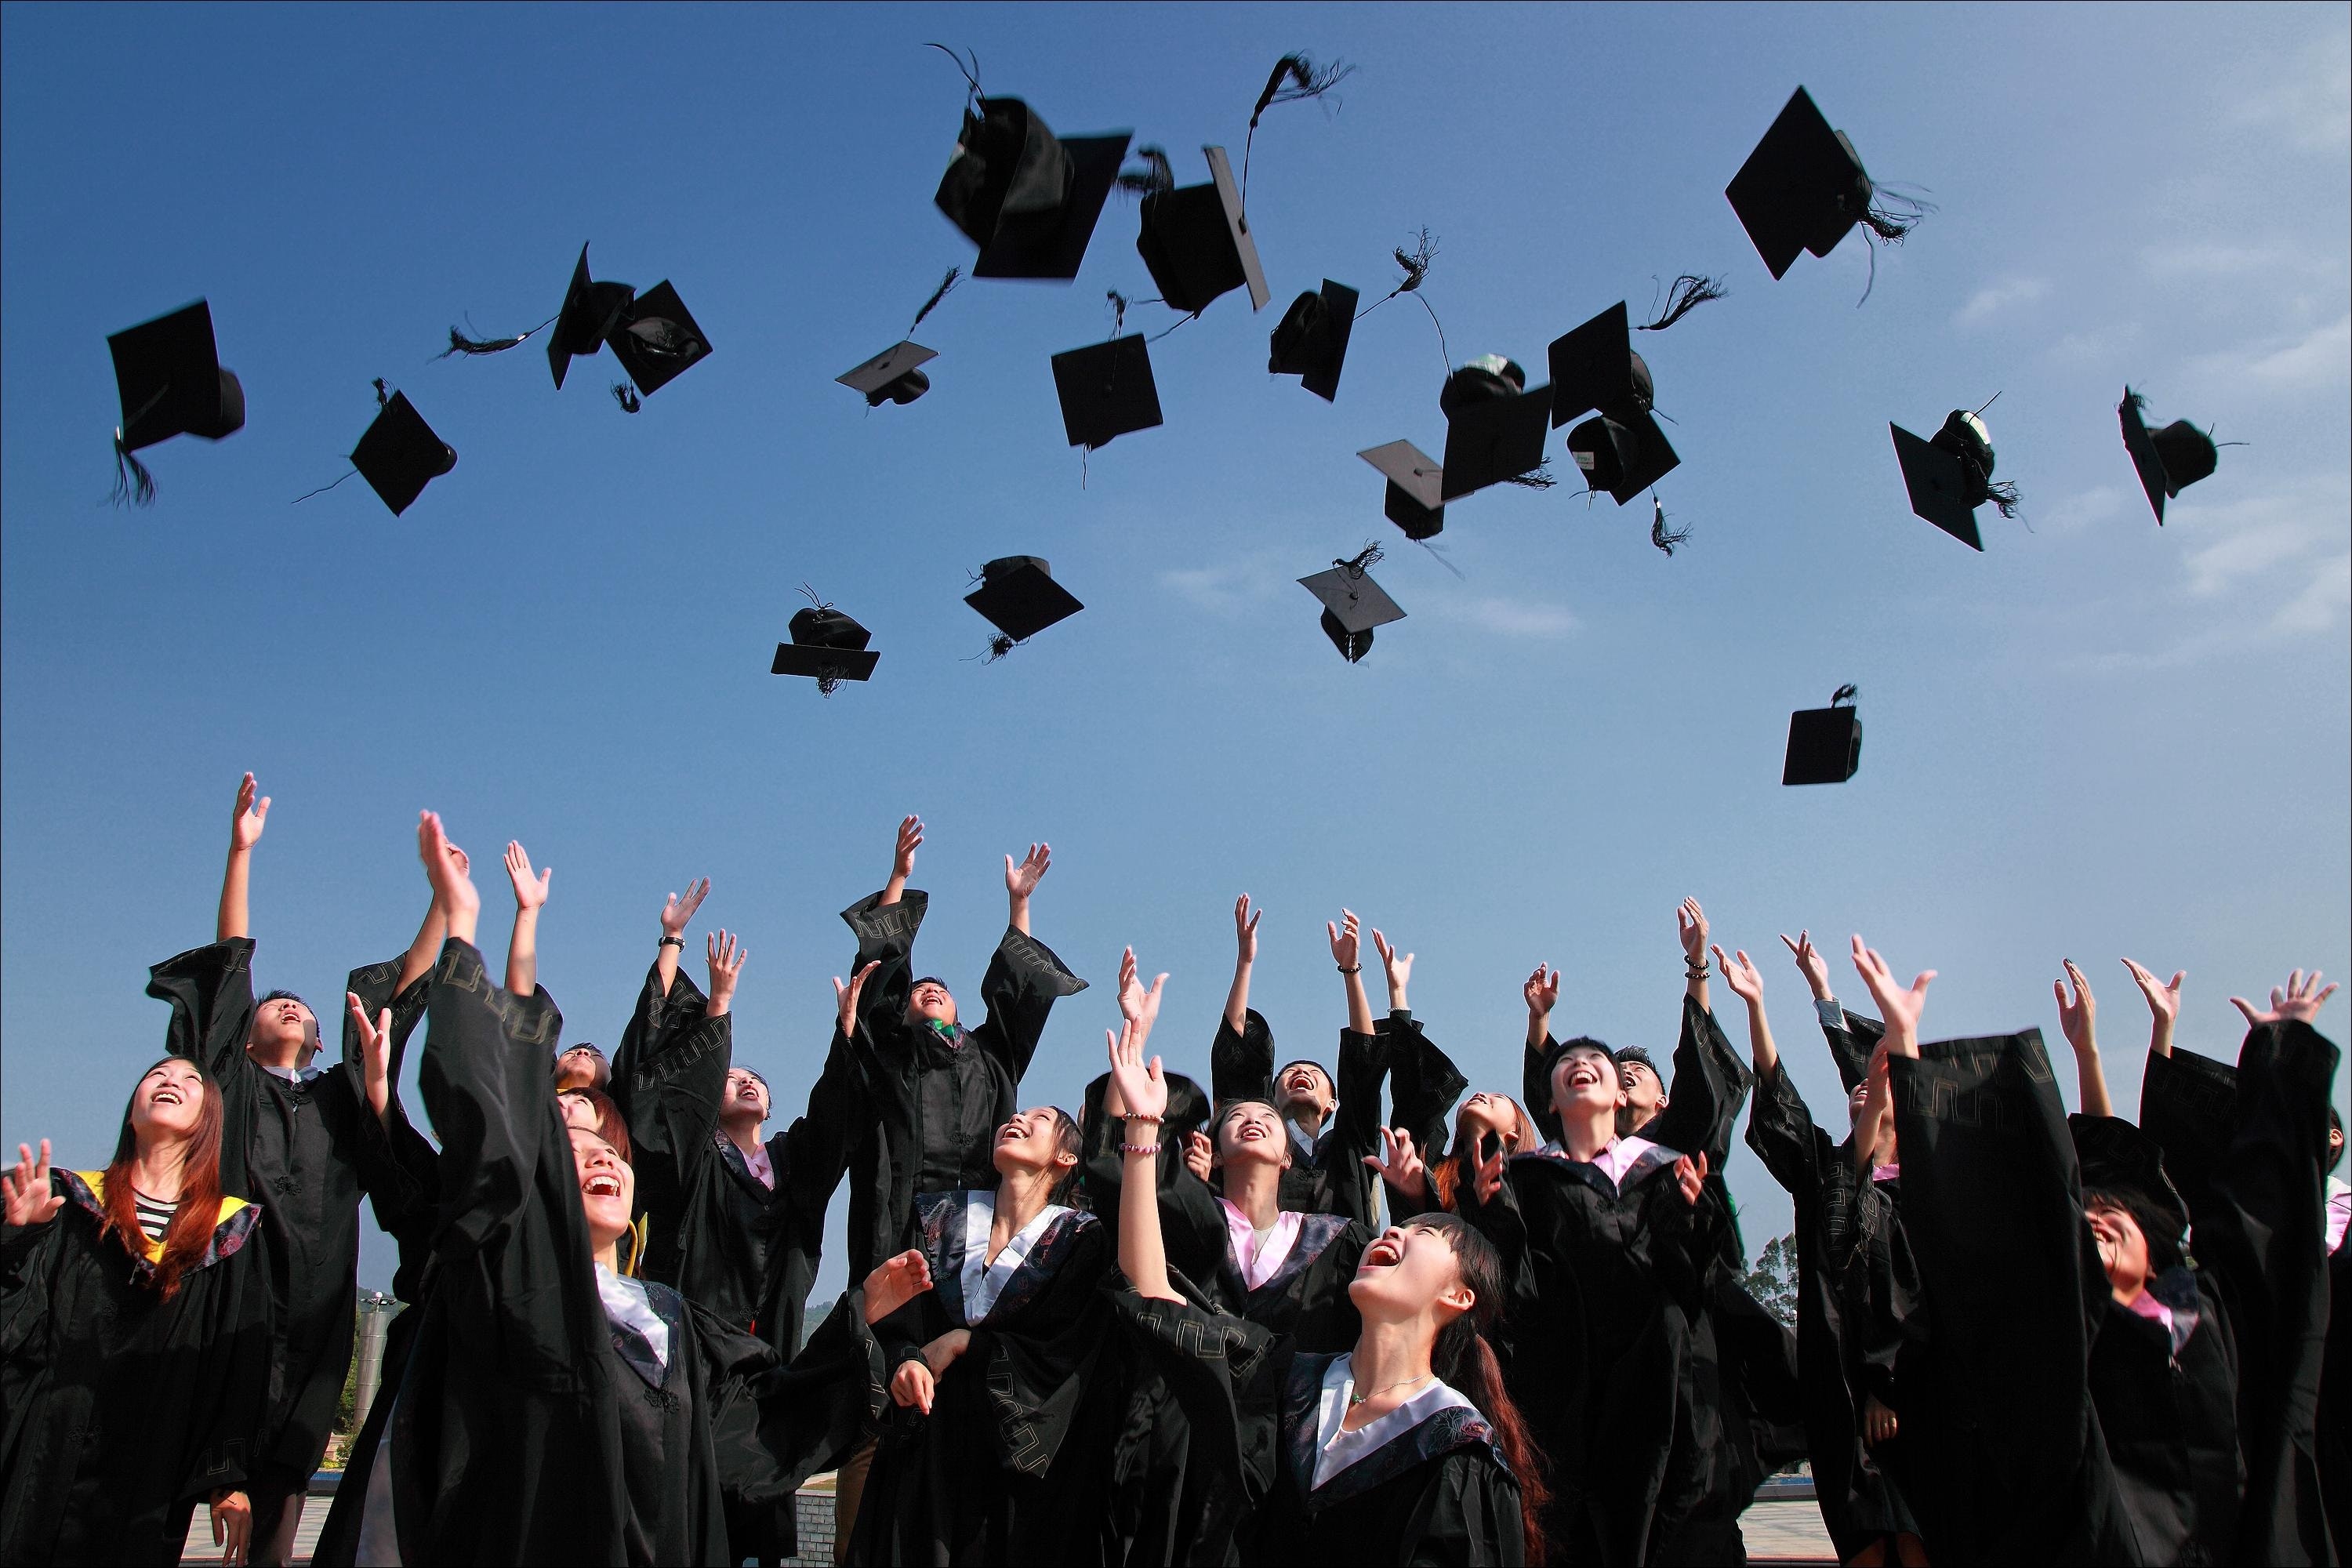 Masters degree graduates tossing graduation caps in the air